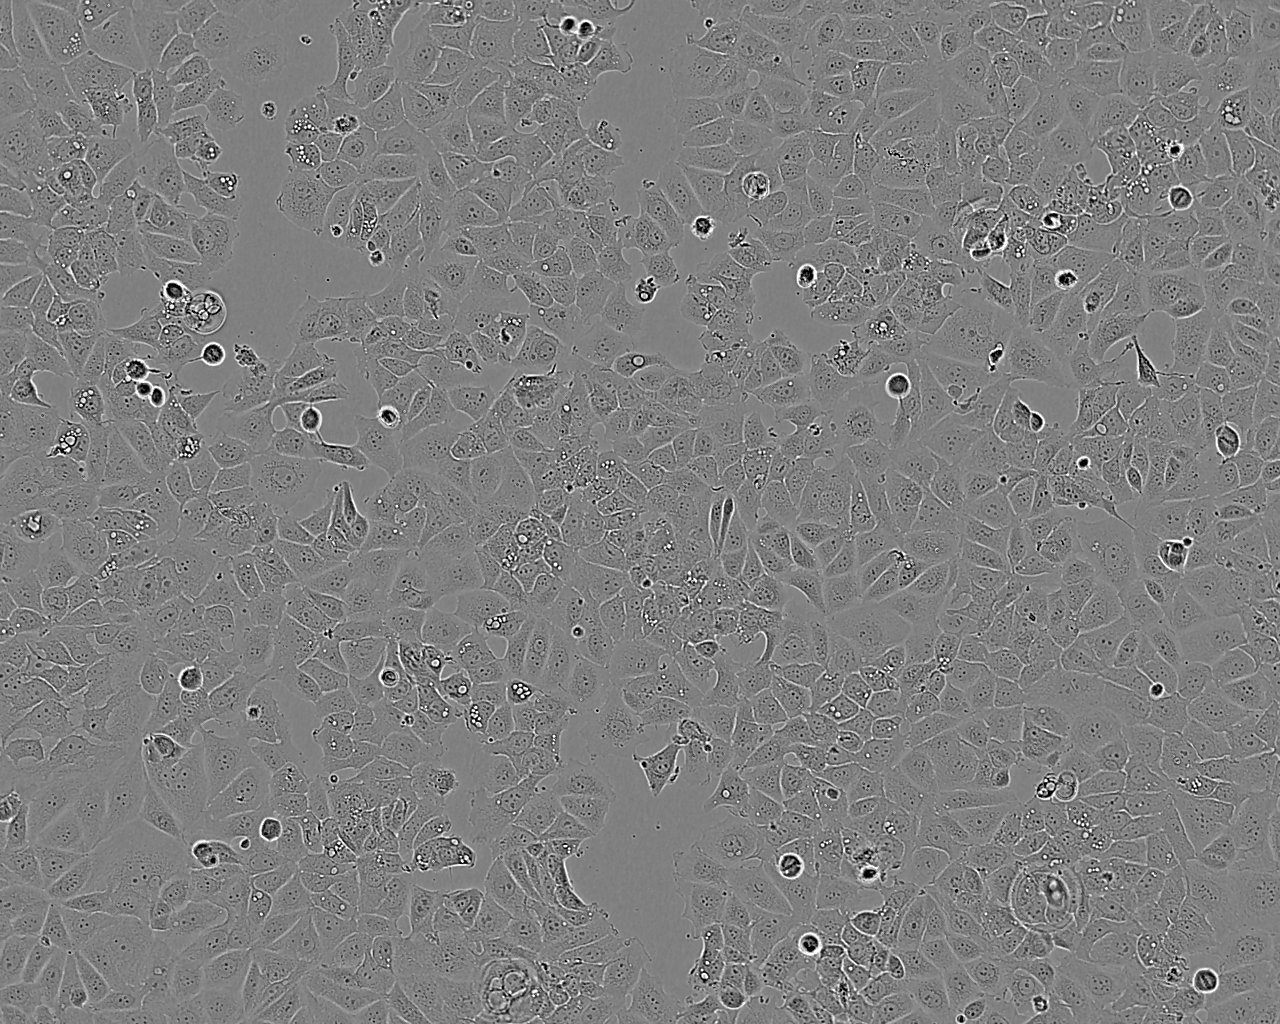 NCI-H2196 Cell|人小细胞肺癌细胞,NCI-H2196 Cell